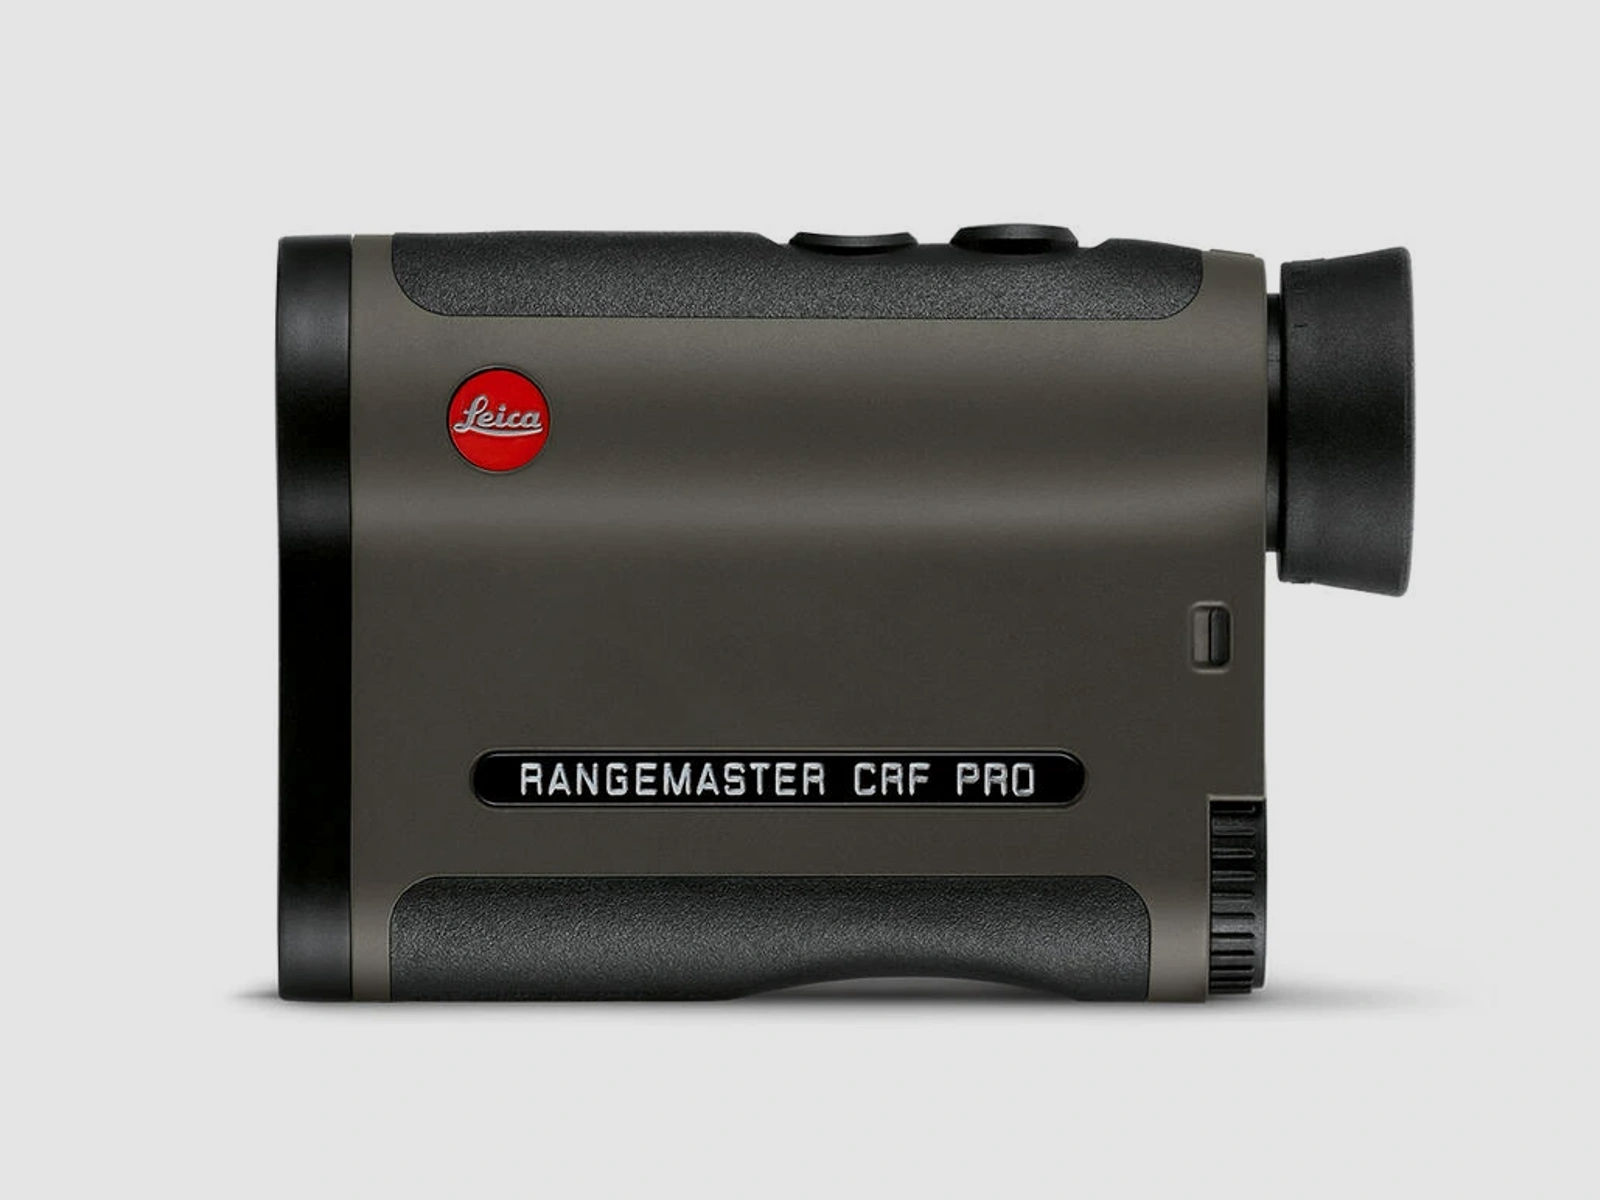 Leica Rangemaster CRF Pro